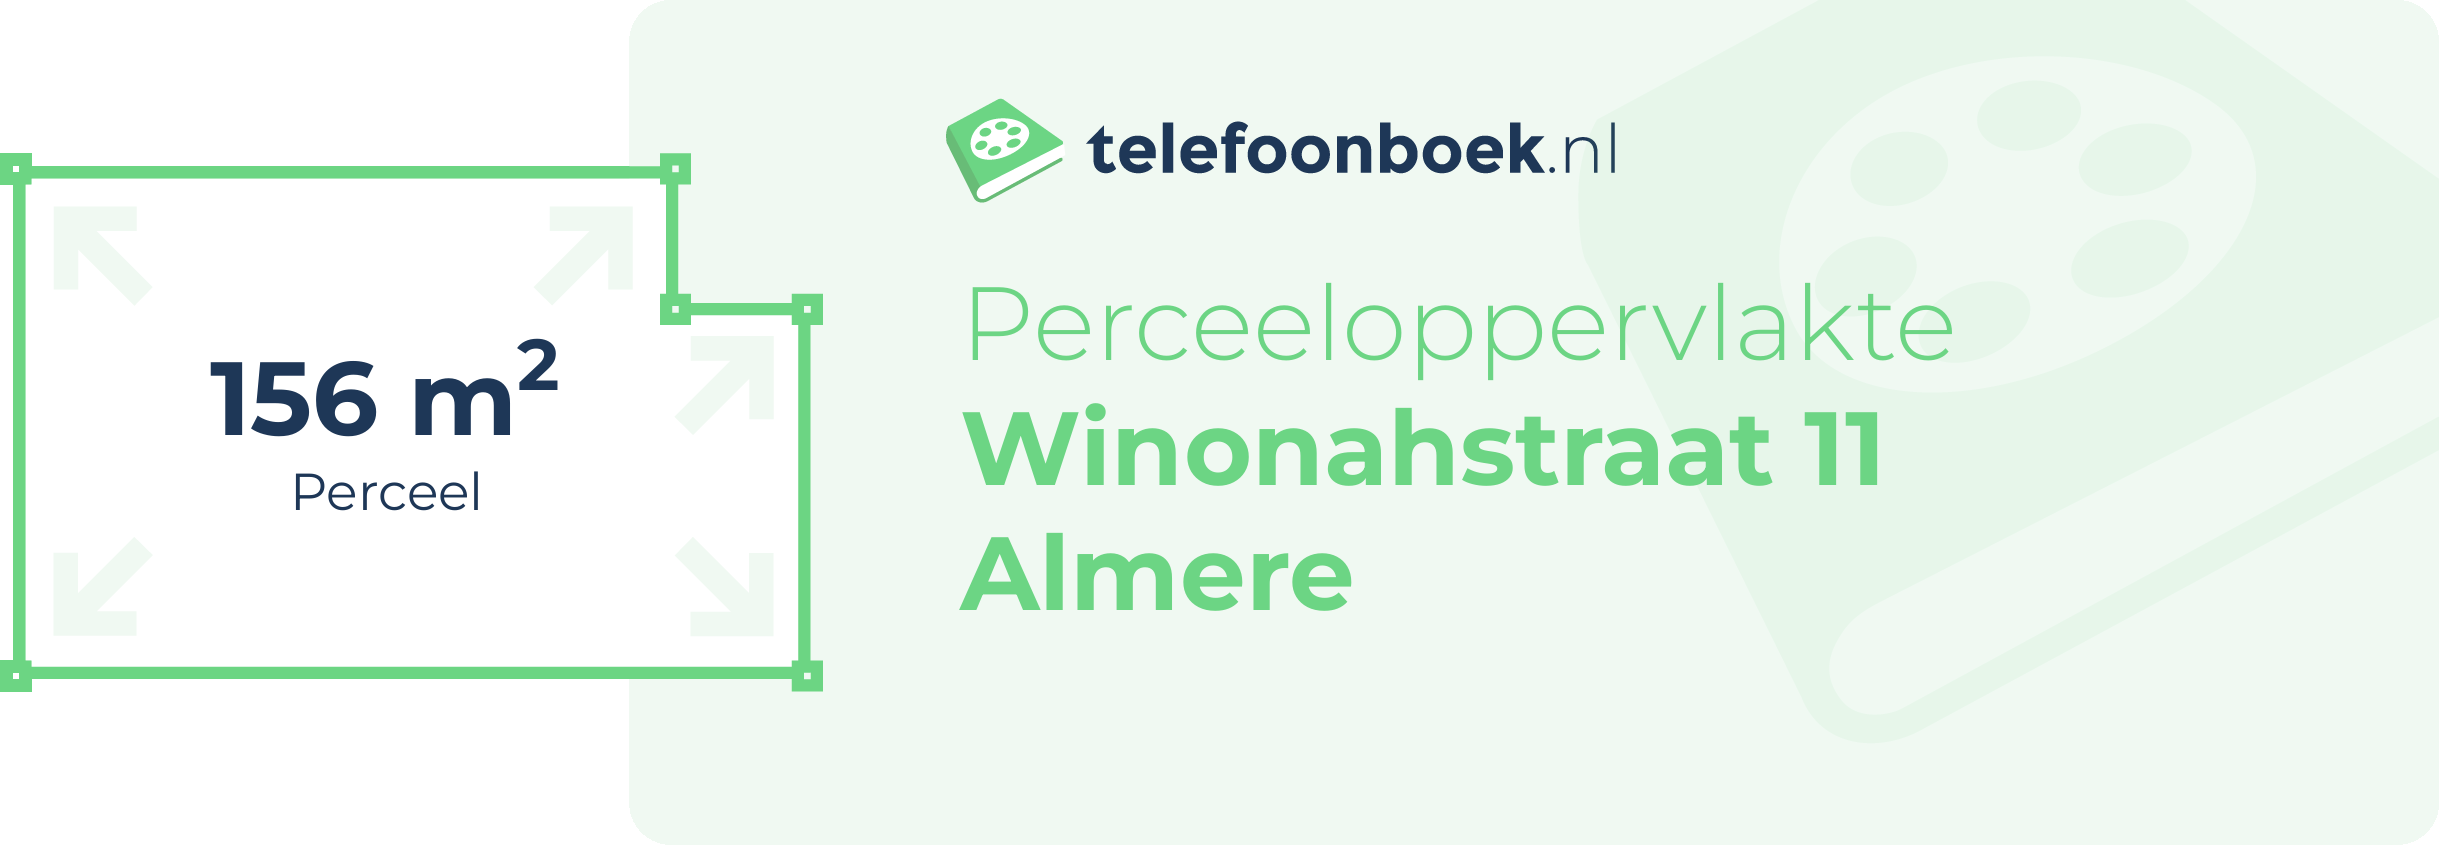 Perceeloppervlakte Winonahstraat 11 Almere